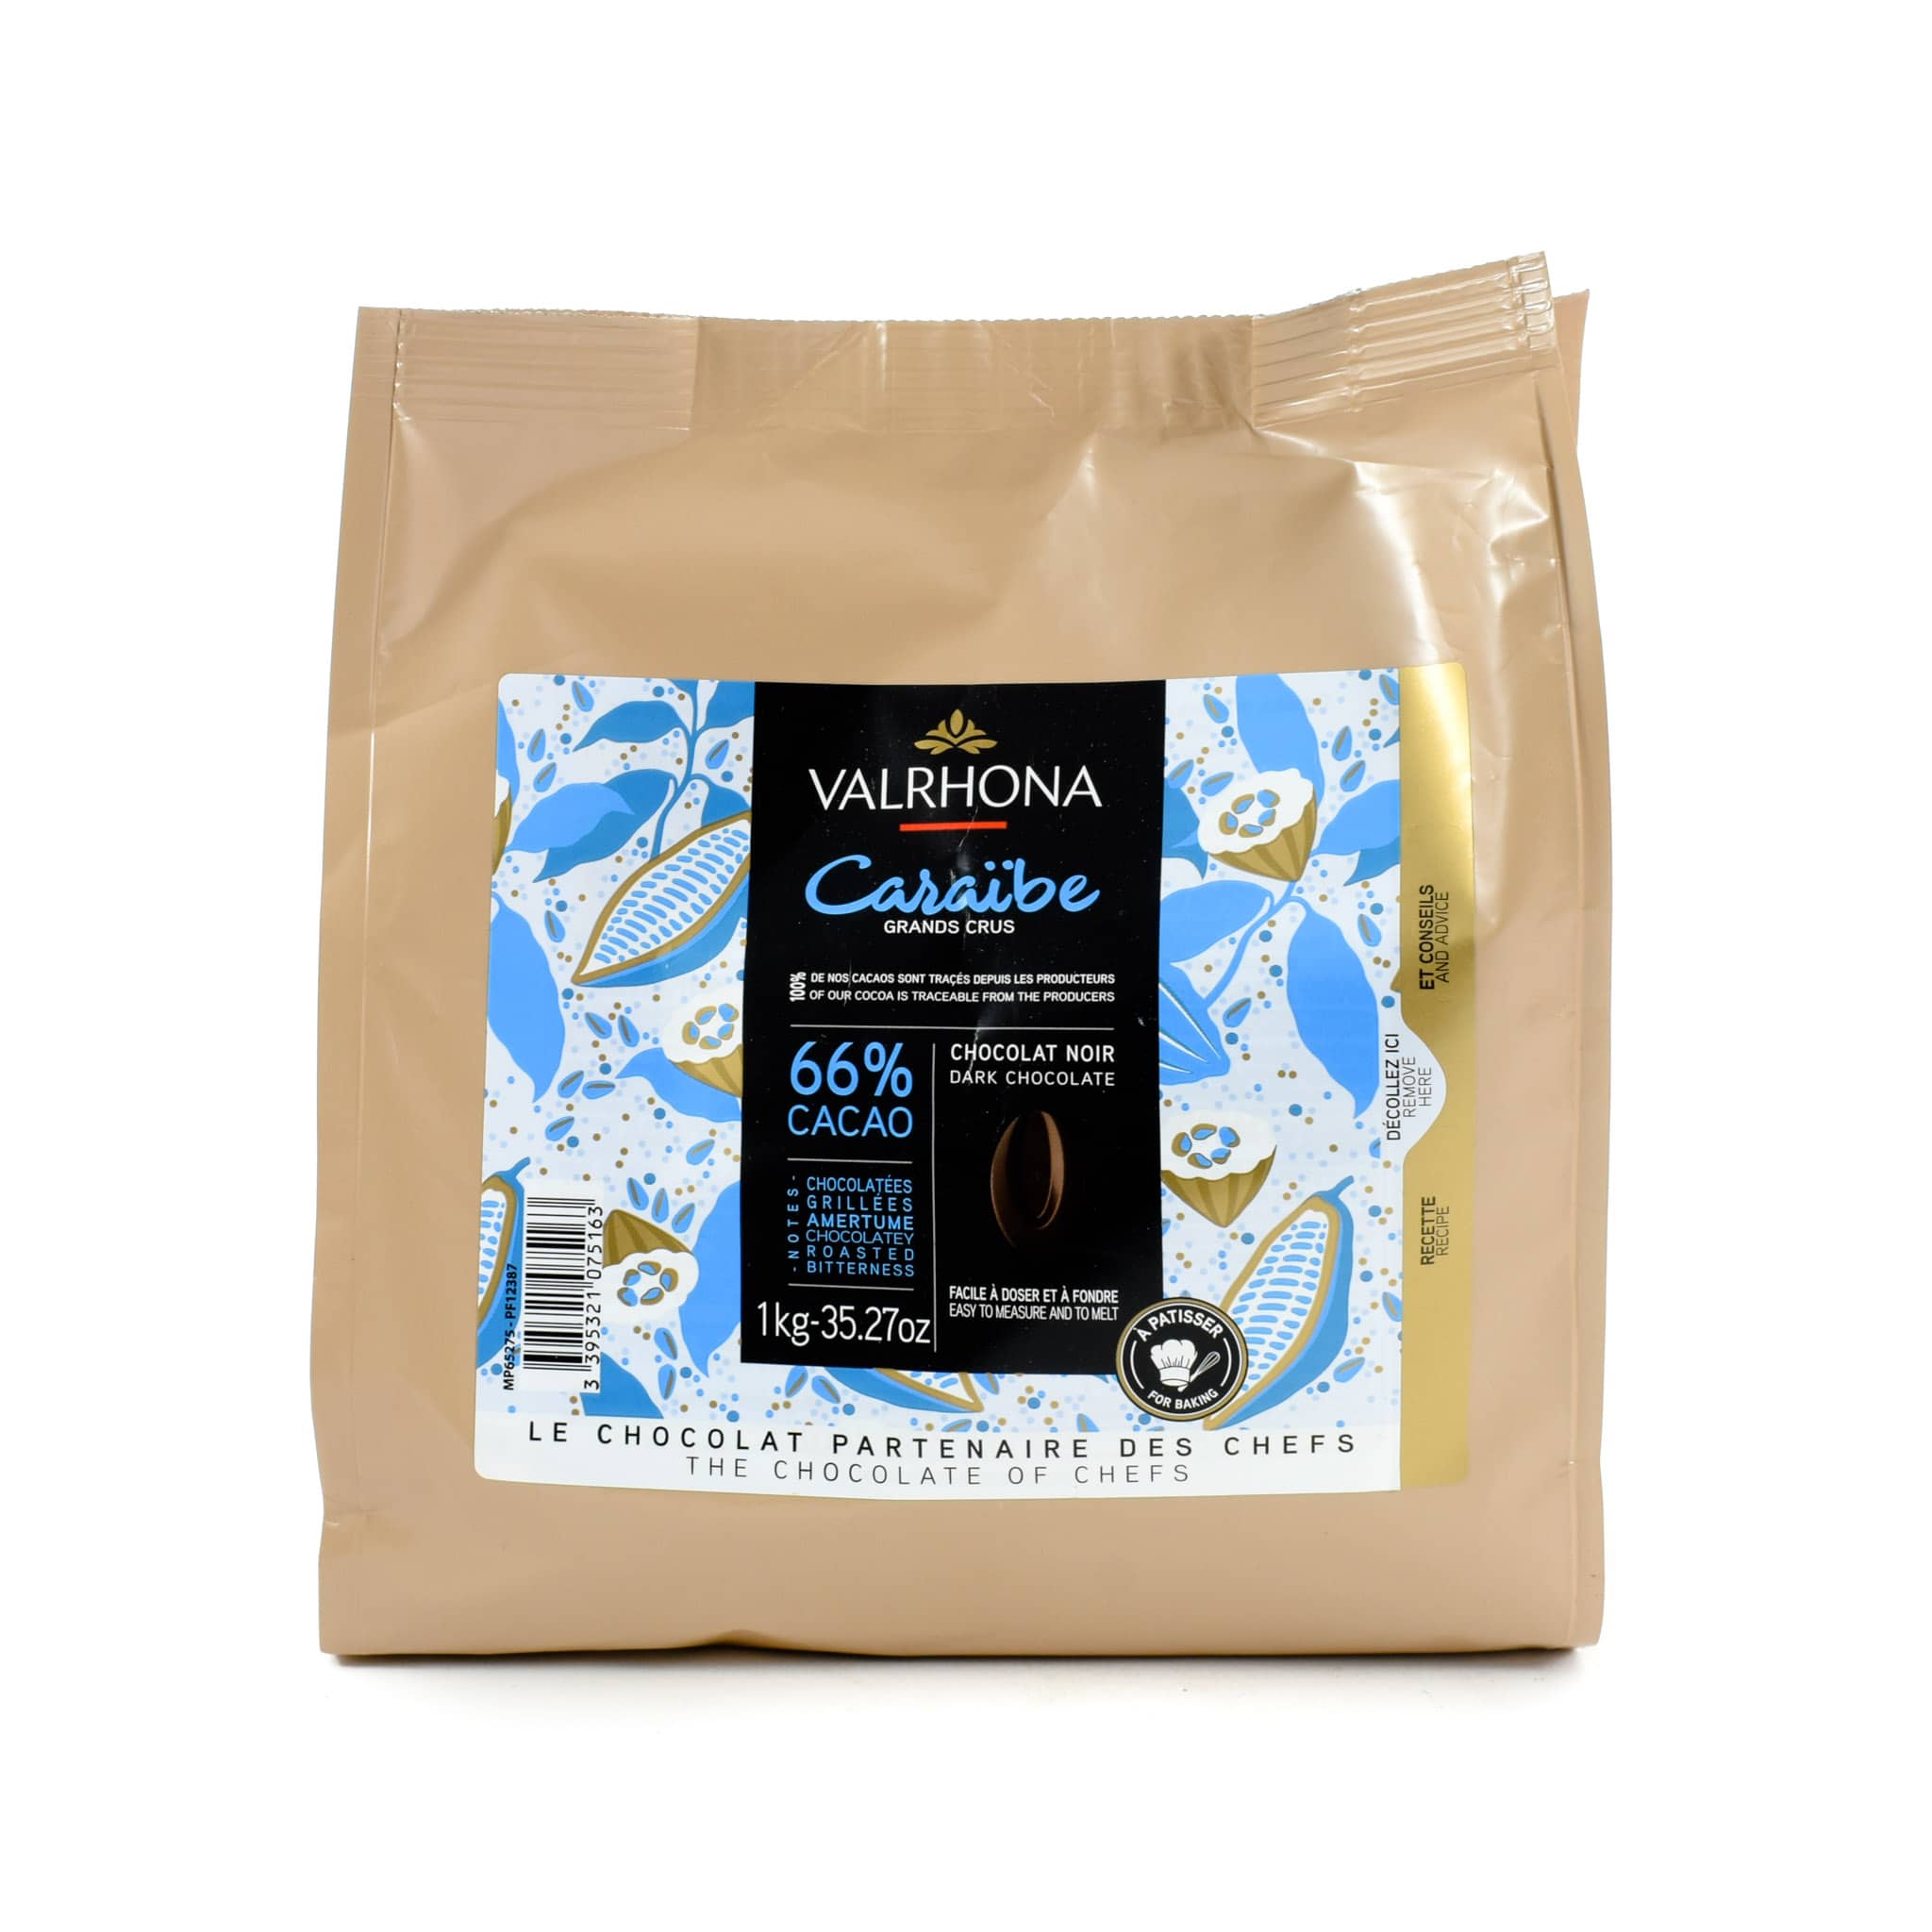 Valrhona Caraibe 66% Dark Chocolate Chips 1kgpackaging